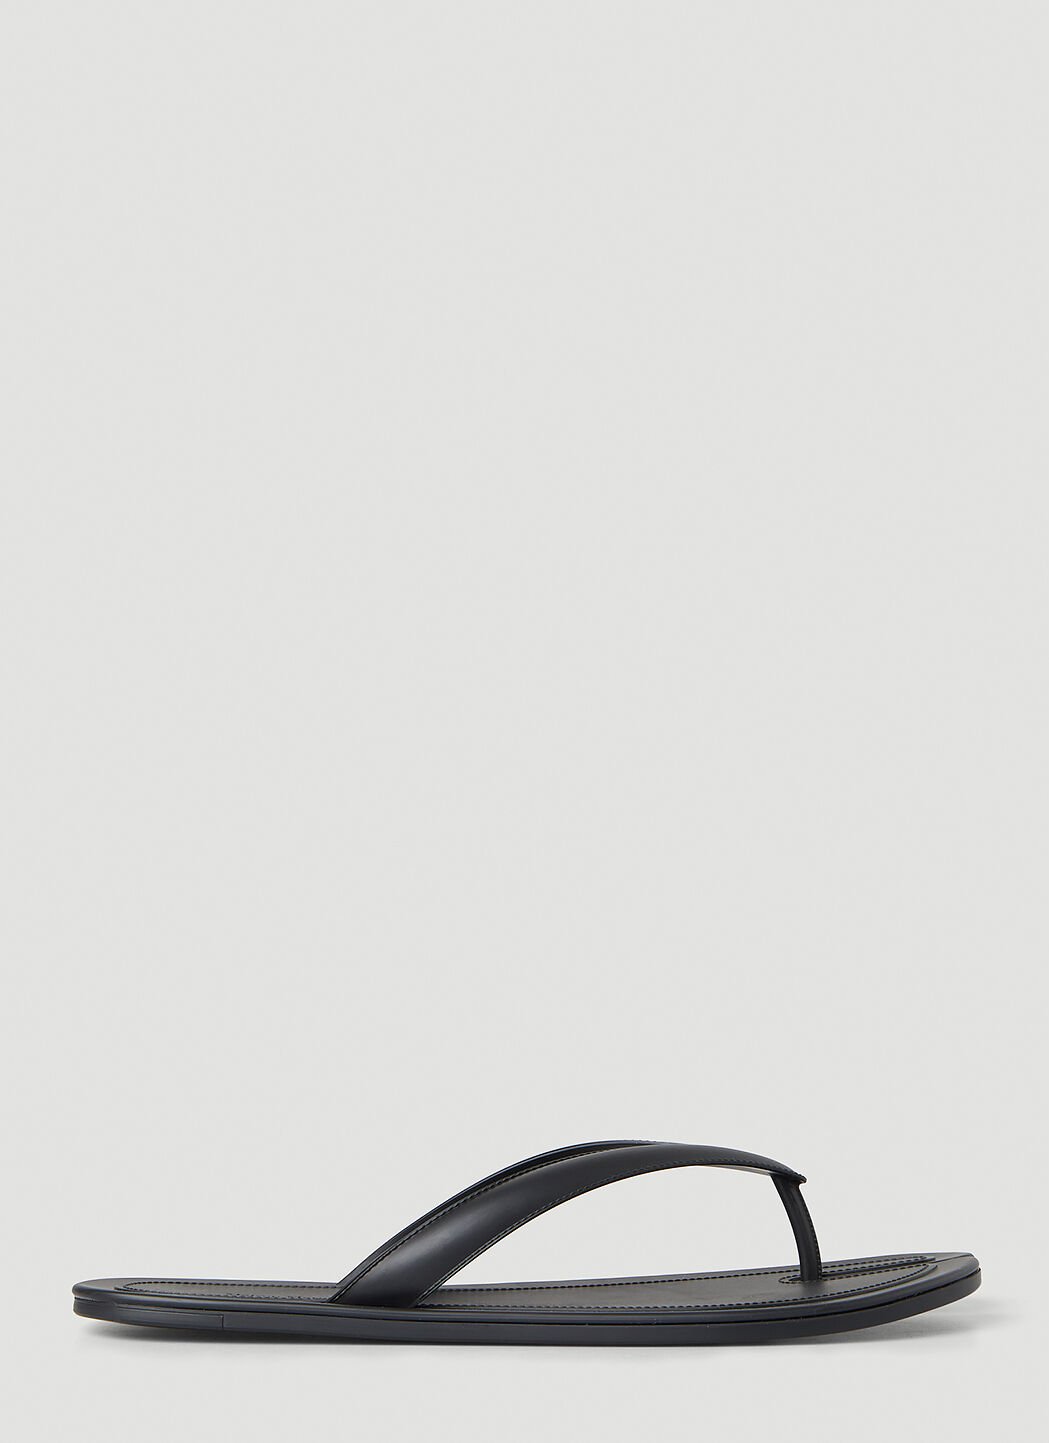 adidas SPZL Tabi Flip Flops Black aos0157017